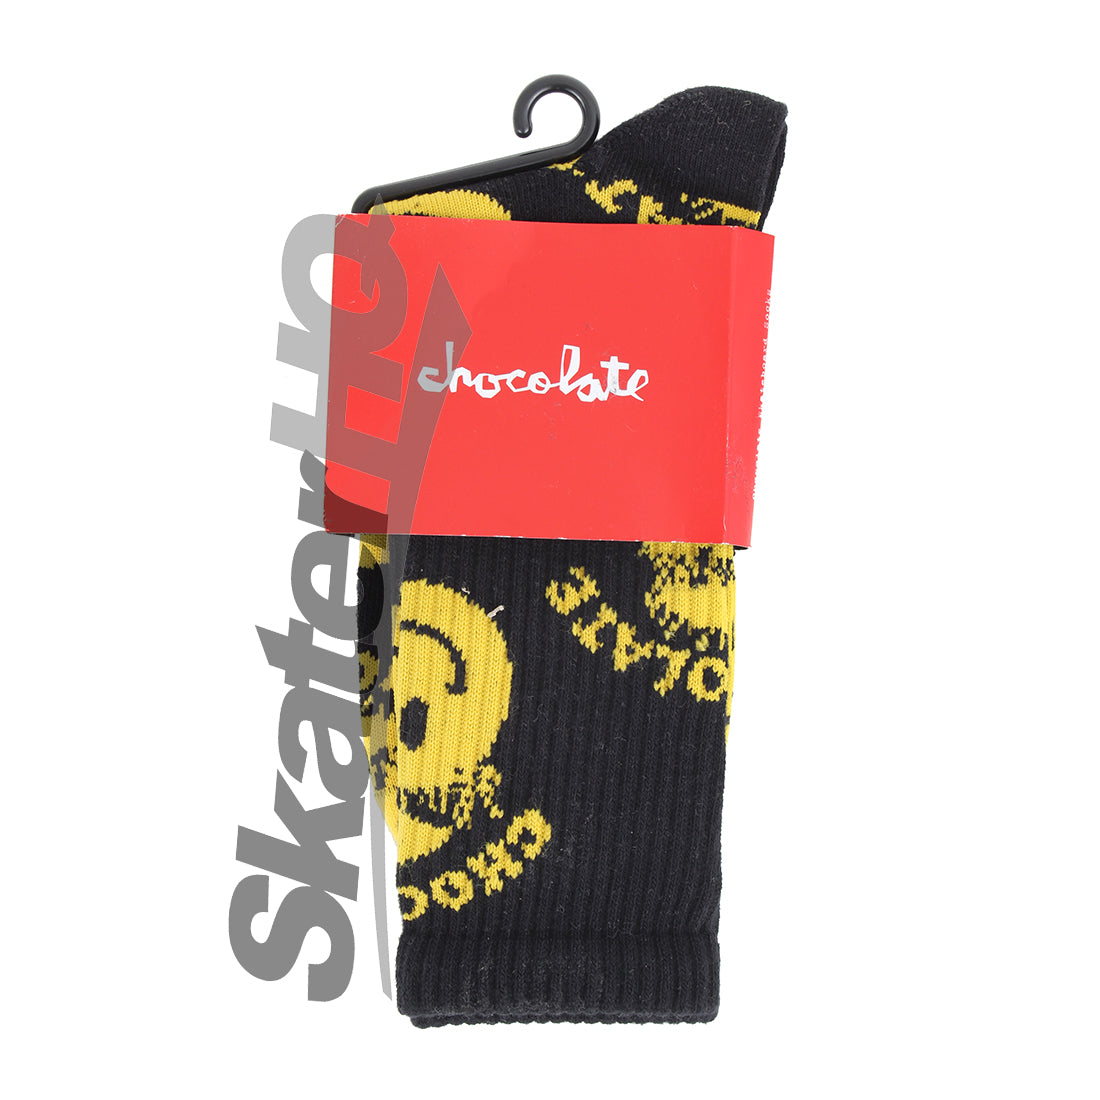 Chocolate Mind Blower Socks - Black/Yellow Apparel Socks